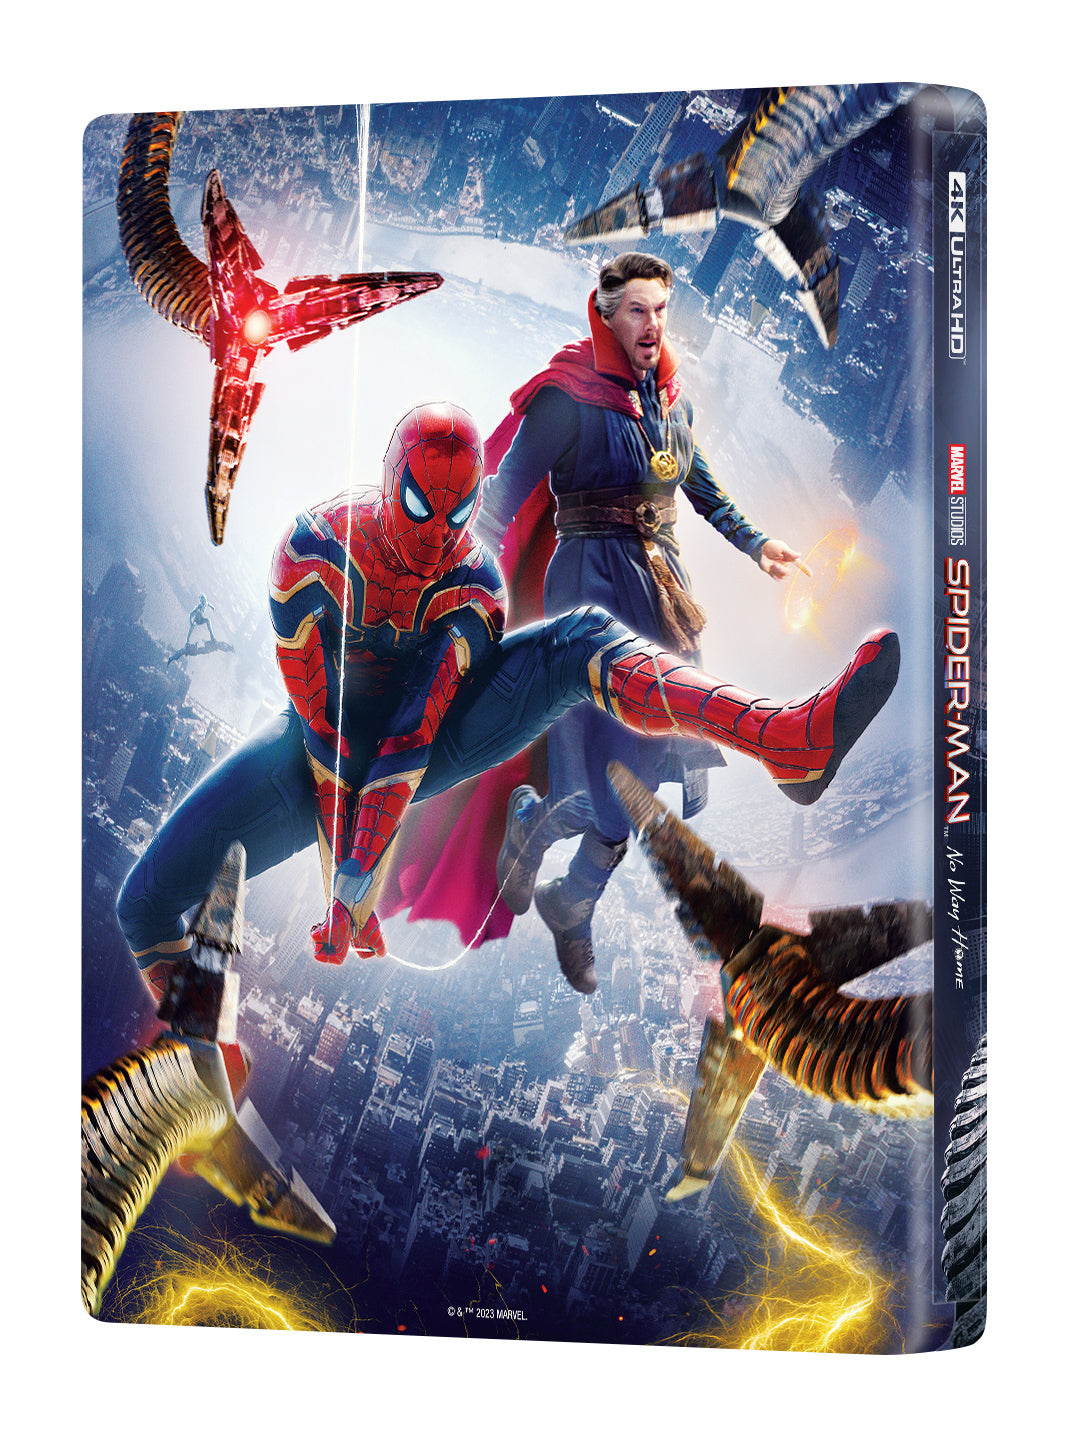 Spider-Man: No Way Home 4K Double Lenticular SteelBook (Spiderman)(2021)(ME#66)(Hong Kong)